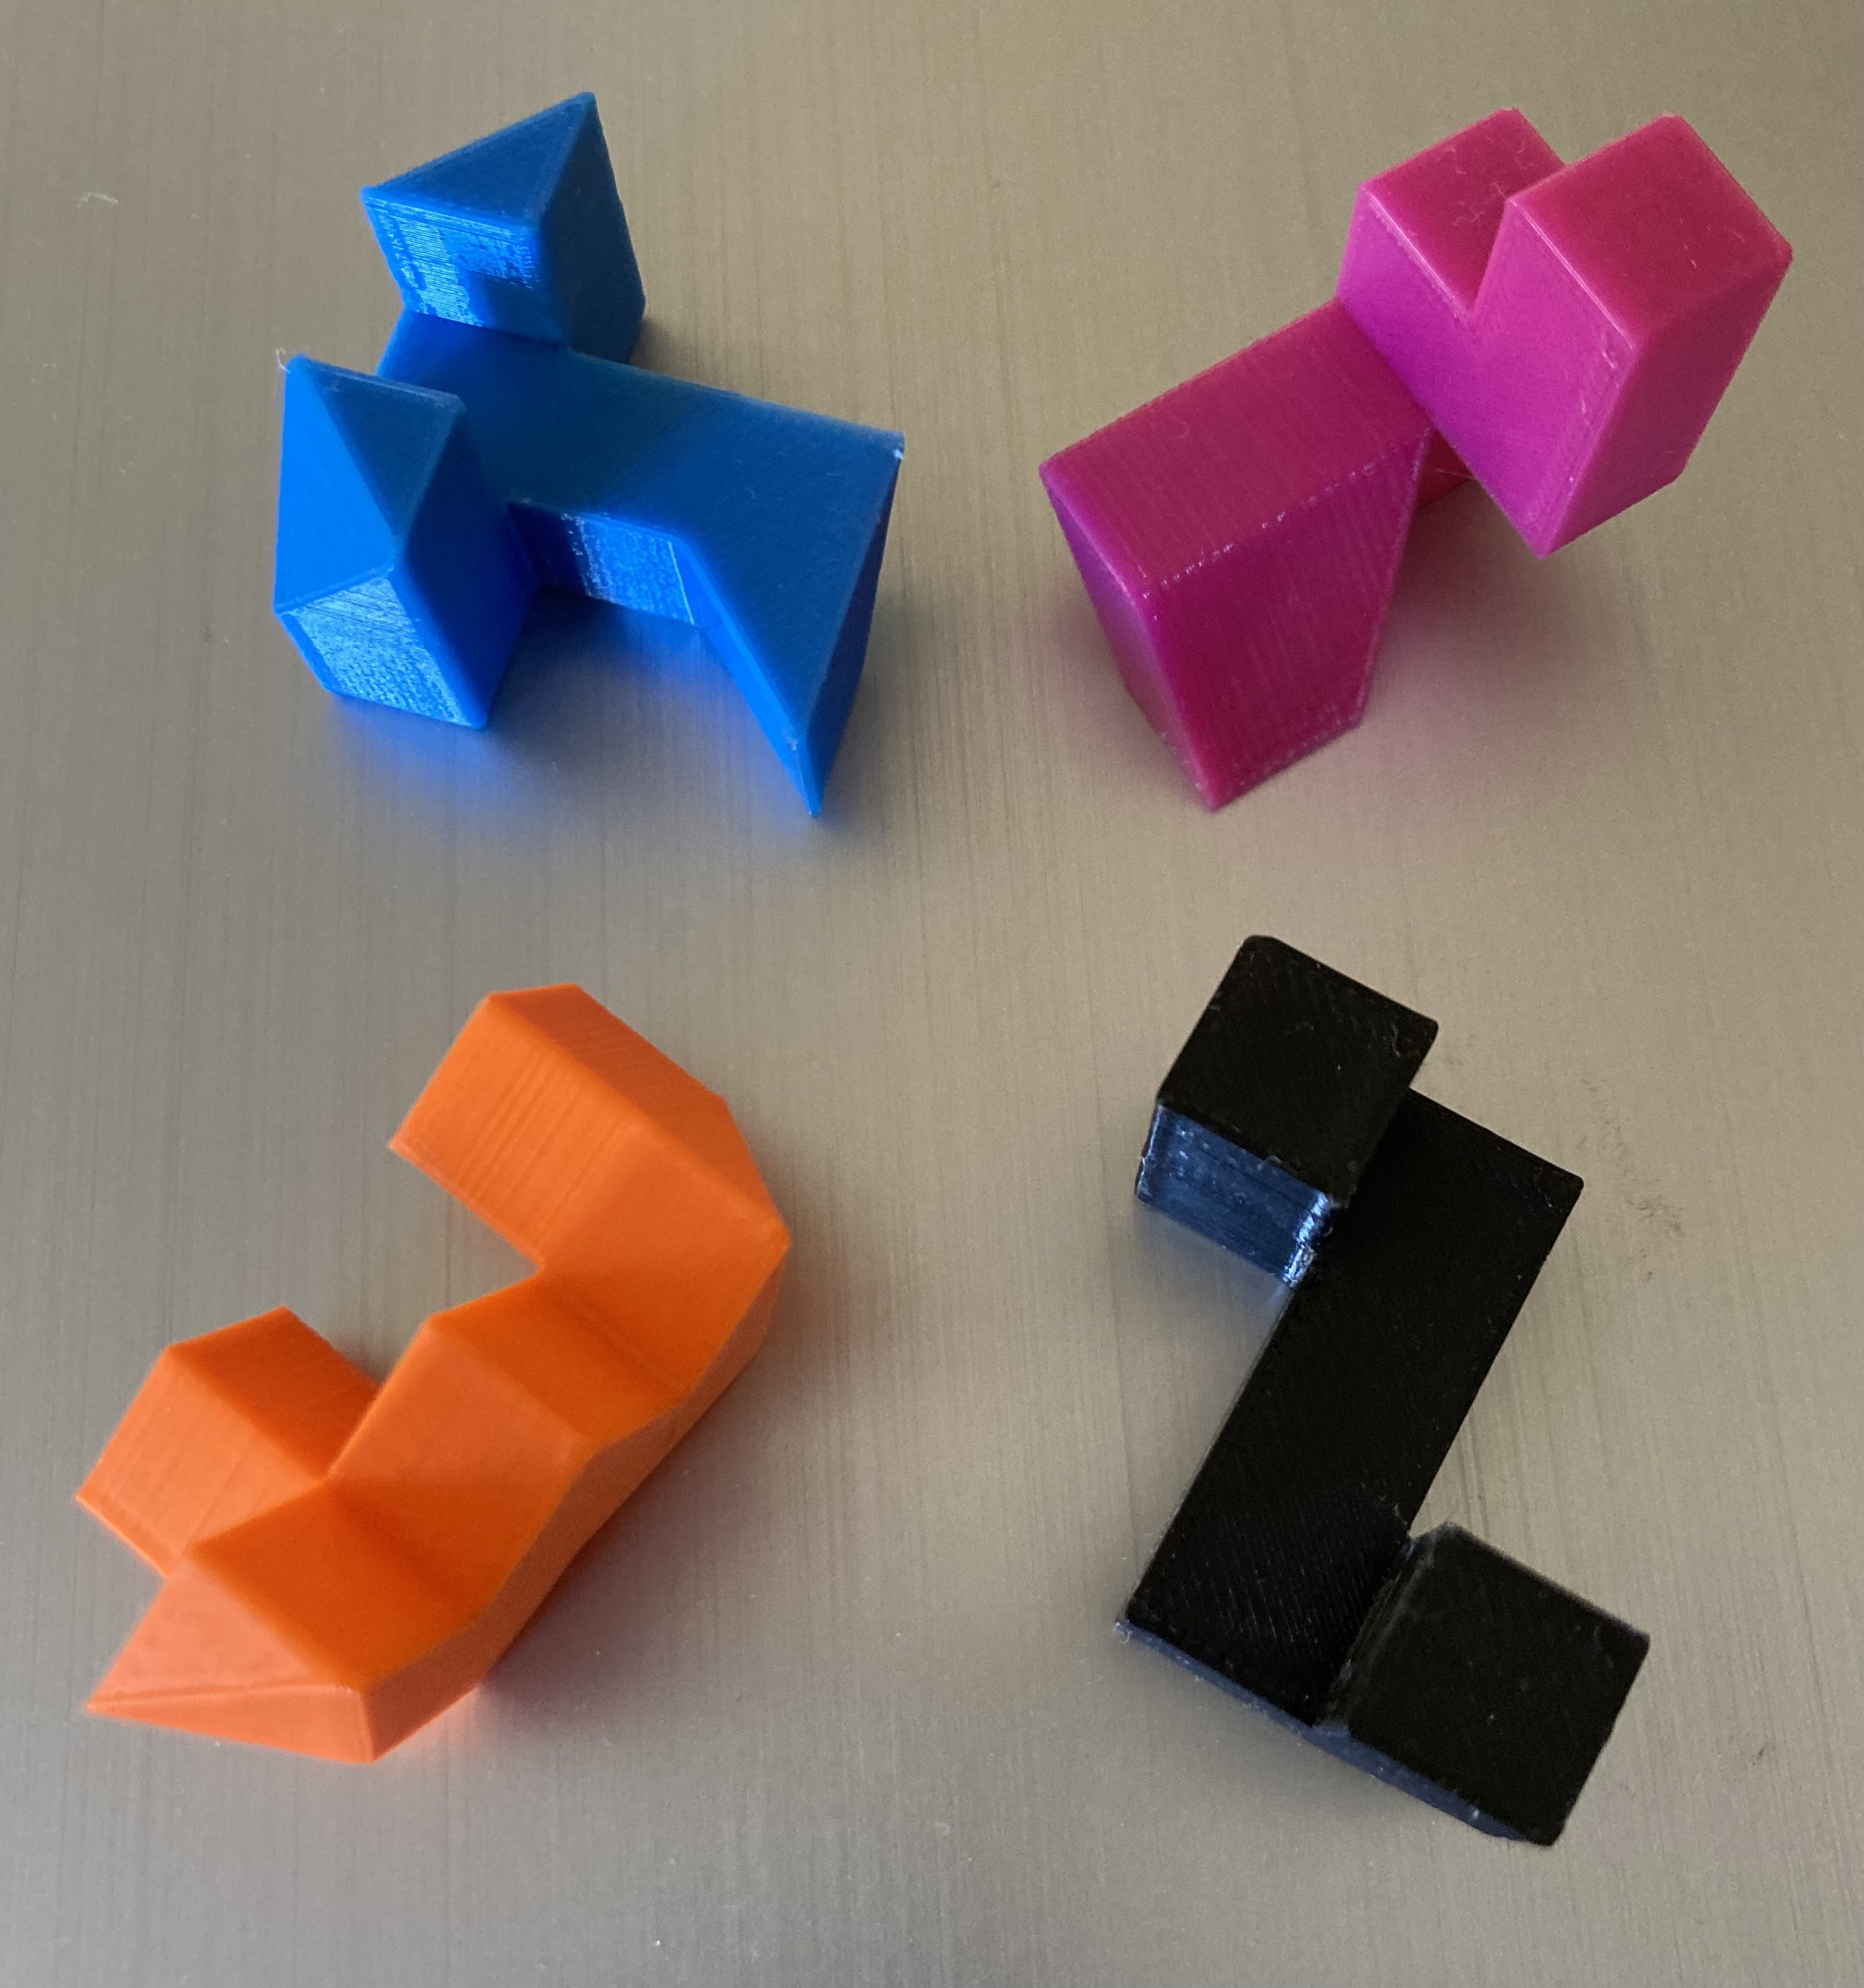 Truncated Cube Puzzle